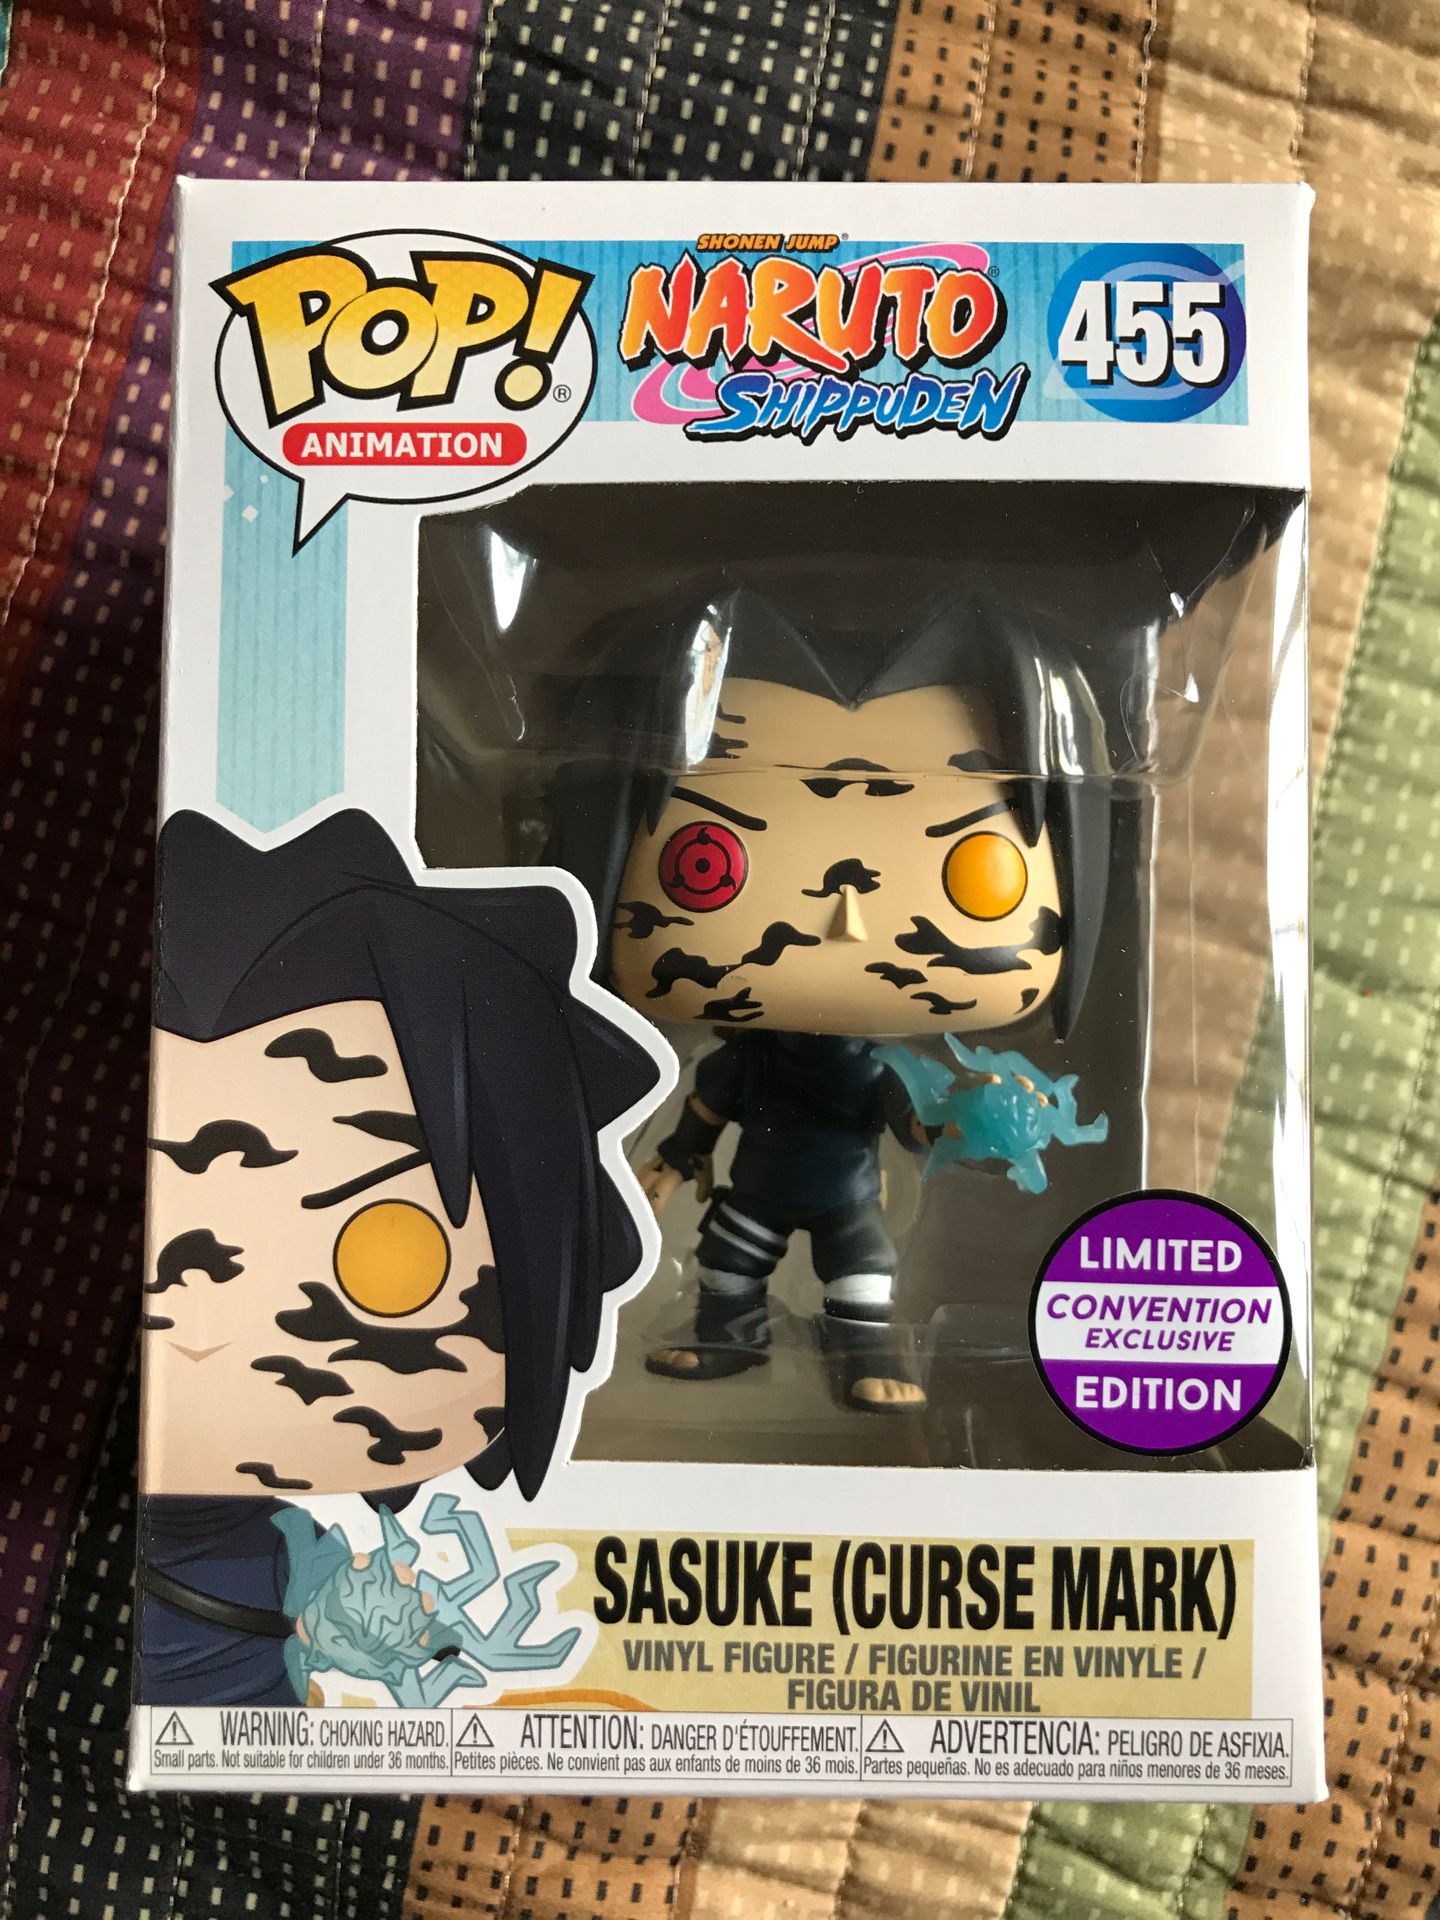 Sasuke (Curse Mark) Naruto Shippuden Exclusive